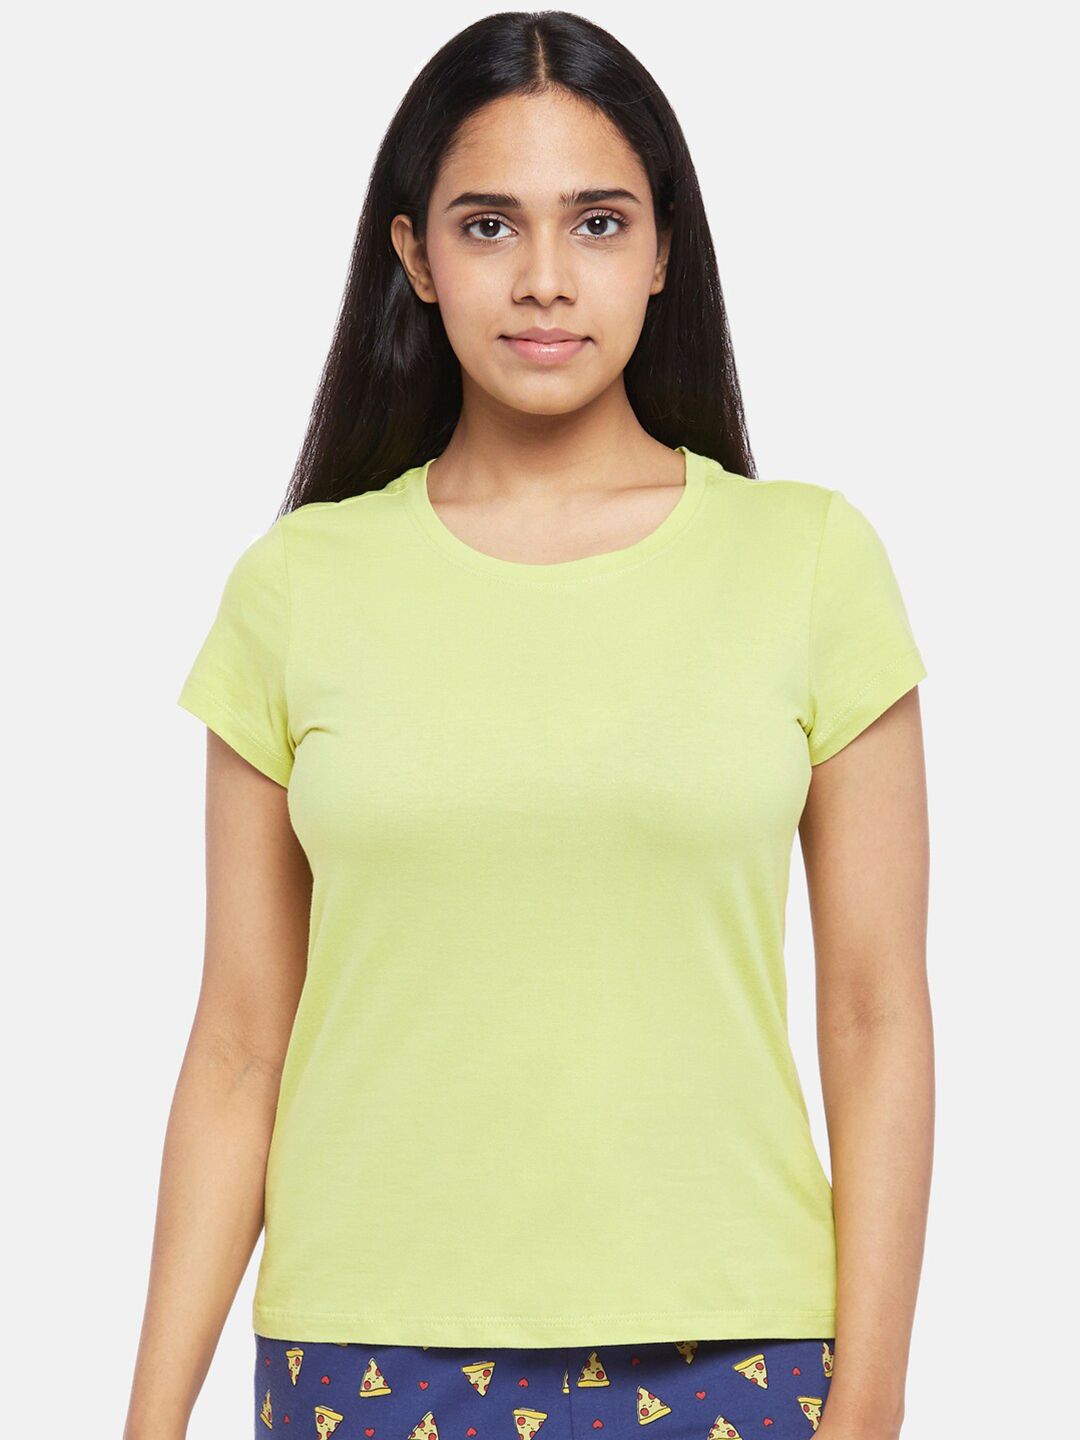 Dreamz by Pantaloons Women Lime Green Cotton Regular Lounge tshirt Price in India